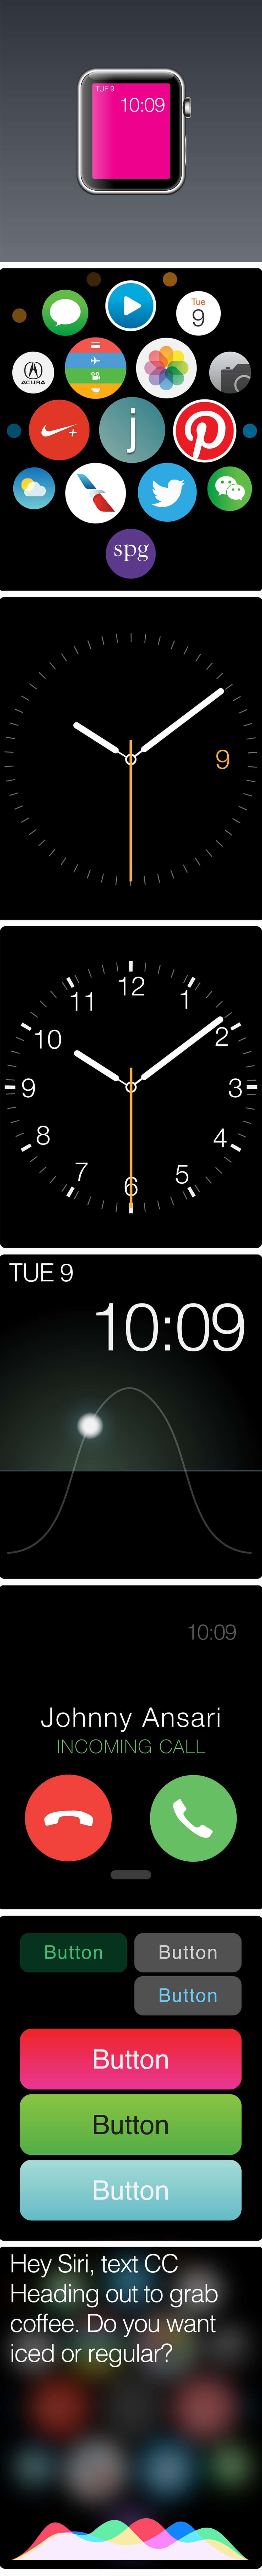 Apple Watch UI kit